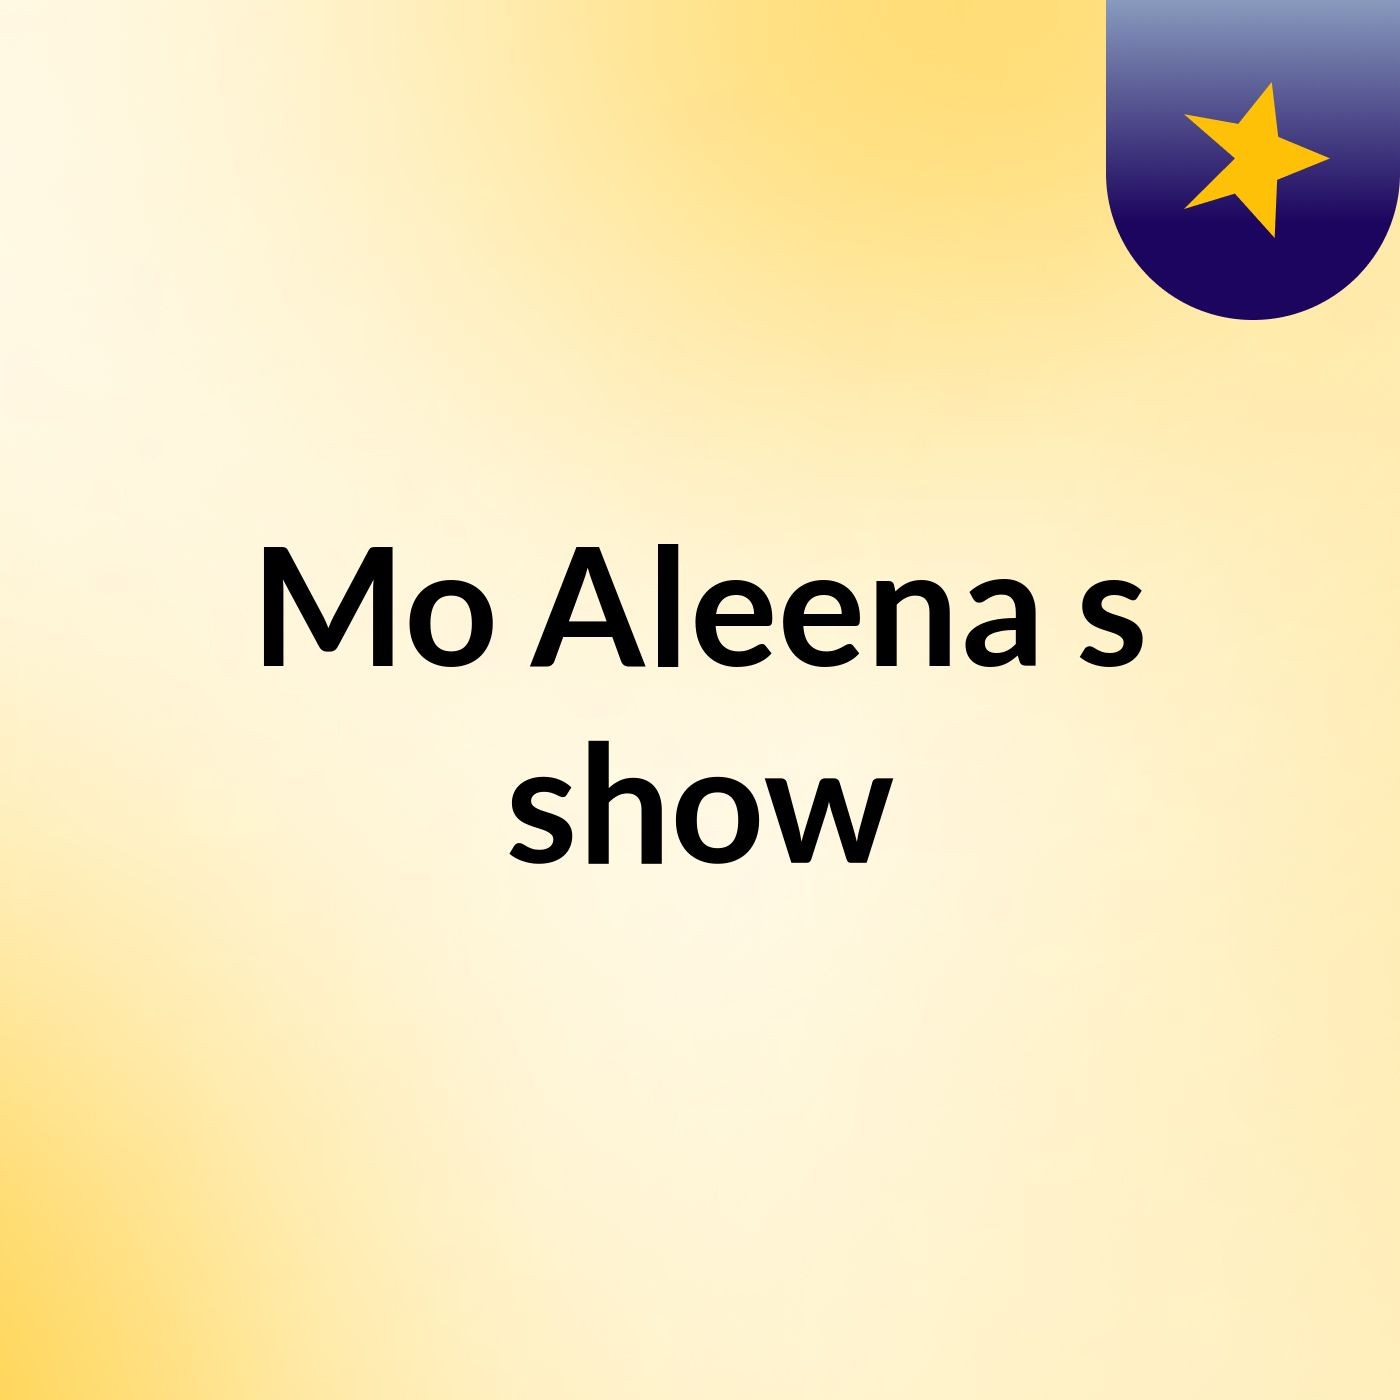 Mo Aleena's show